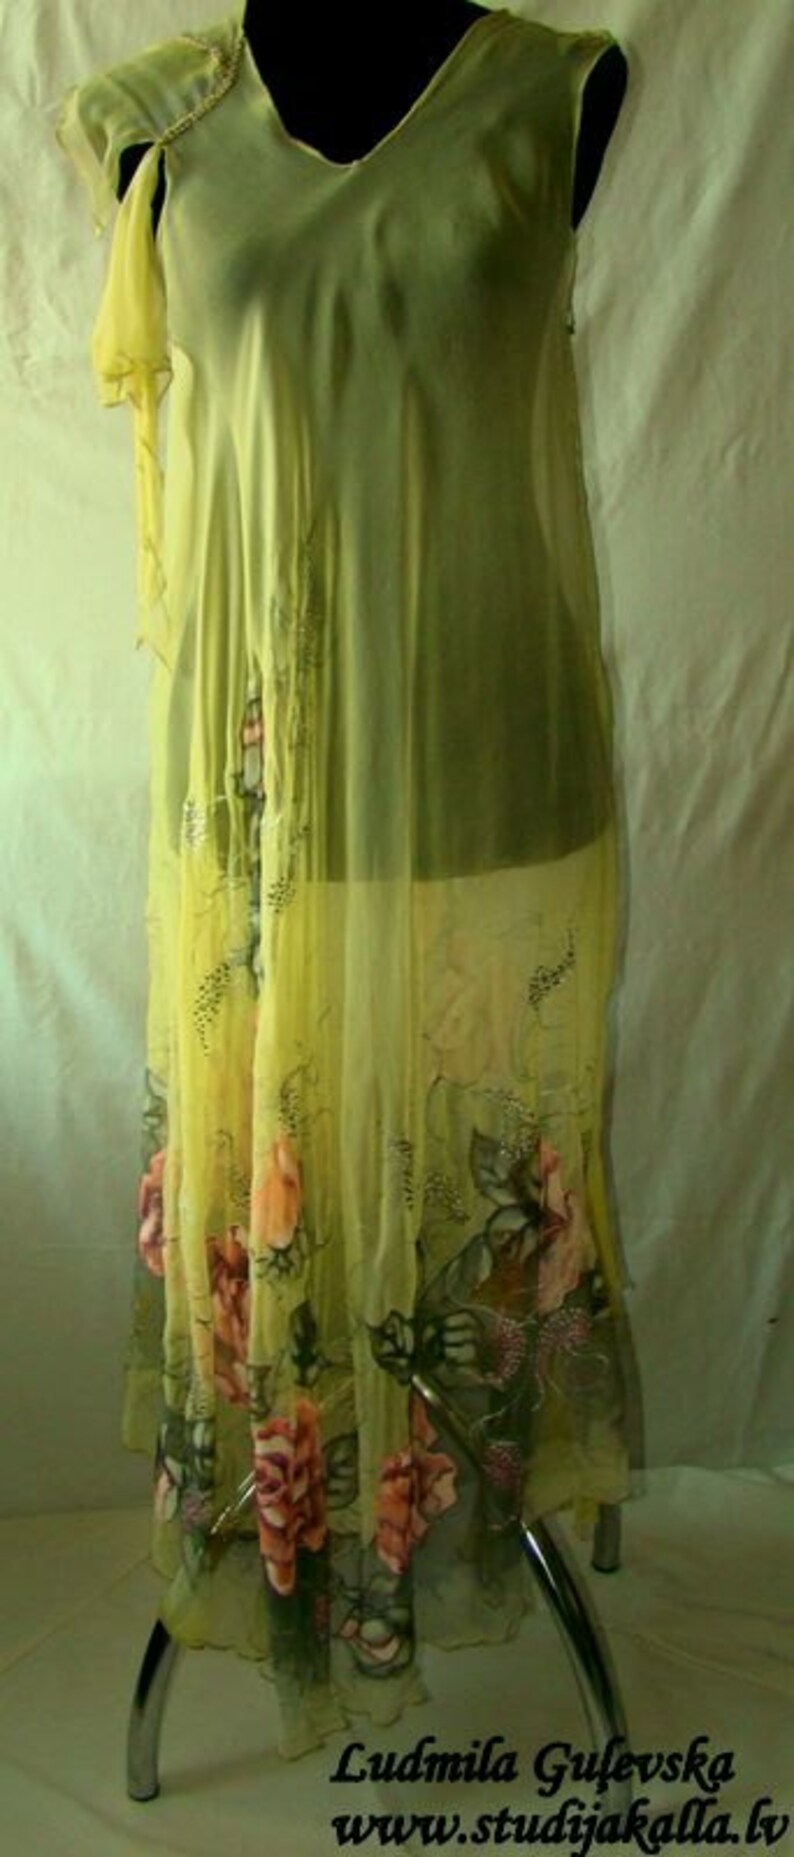 Dress.Natural silk dress handmade artwork silk painting | Etsy